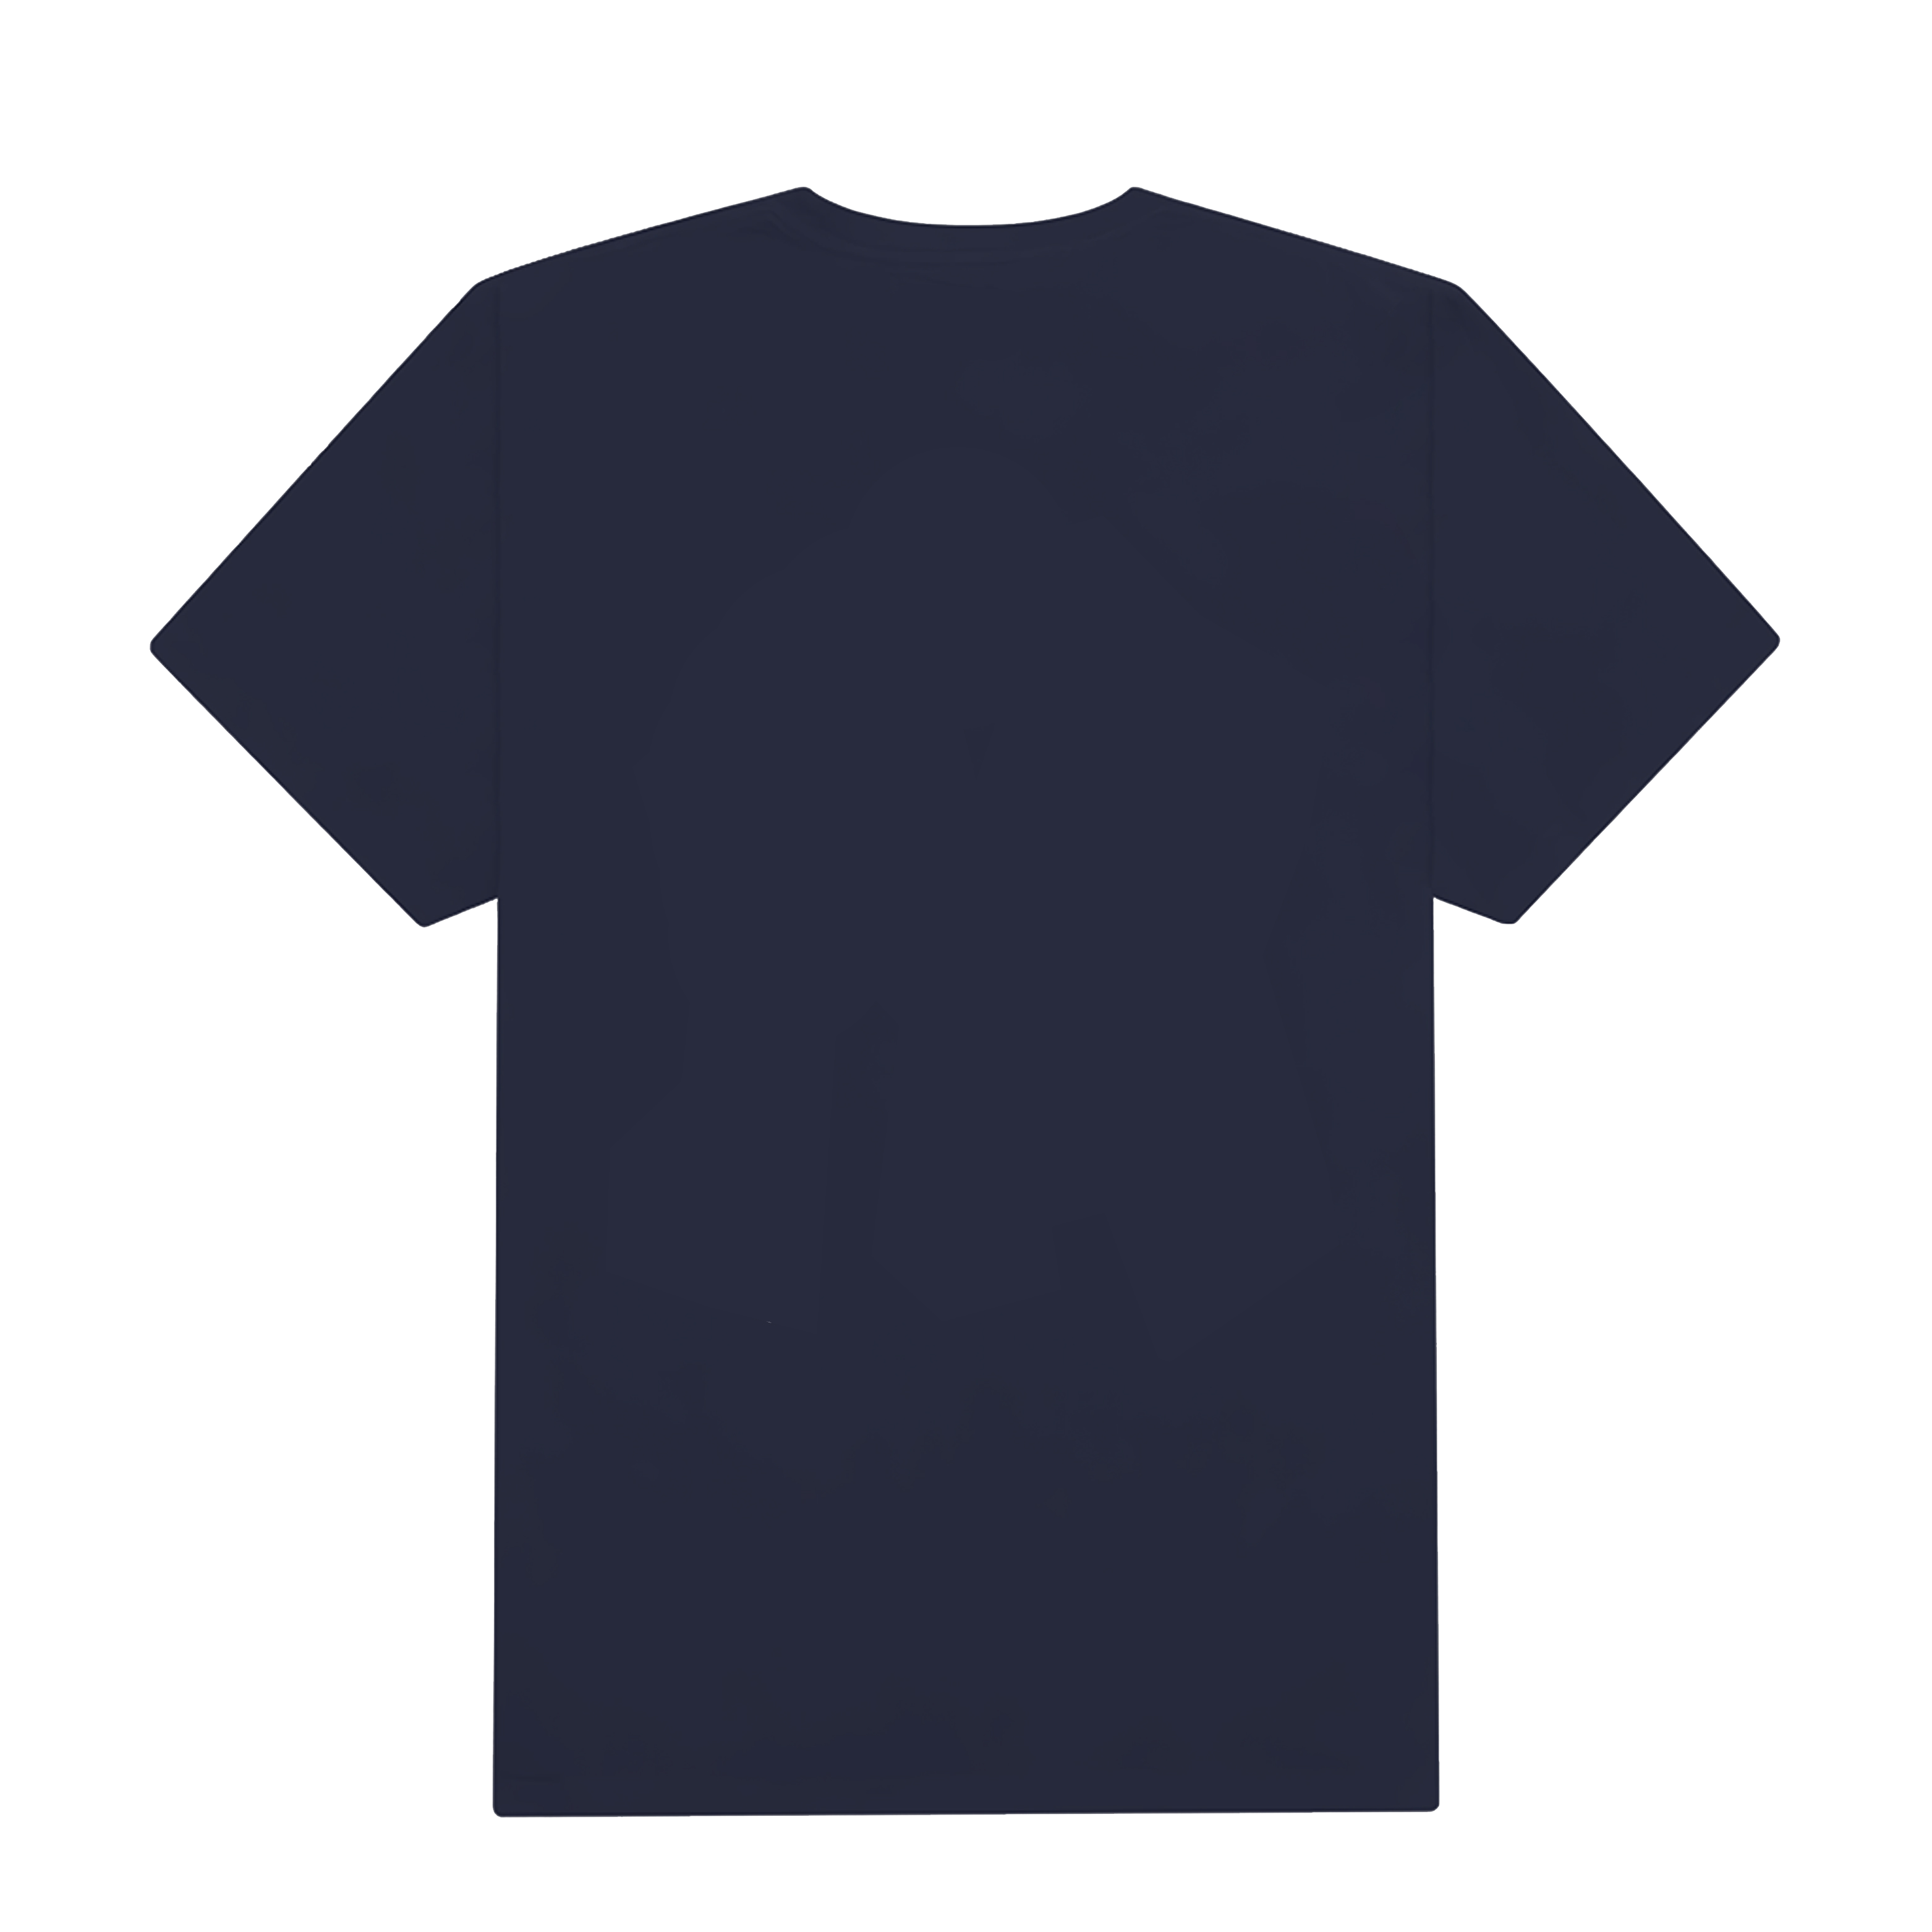 Supreme Patrick  T-Shirt